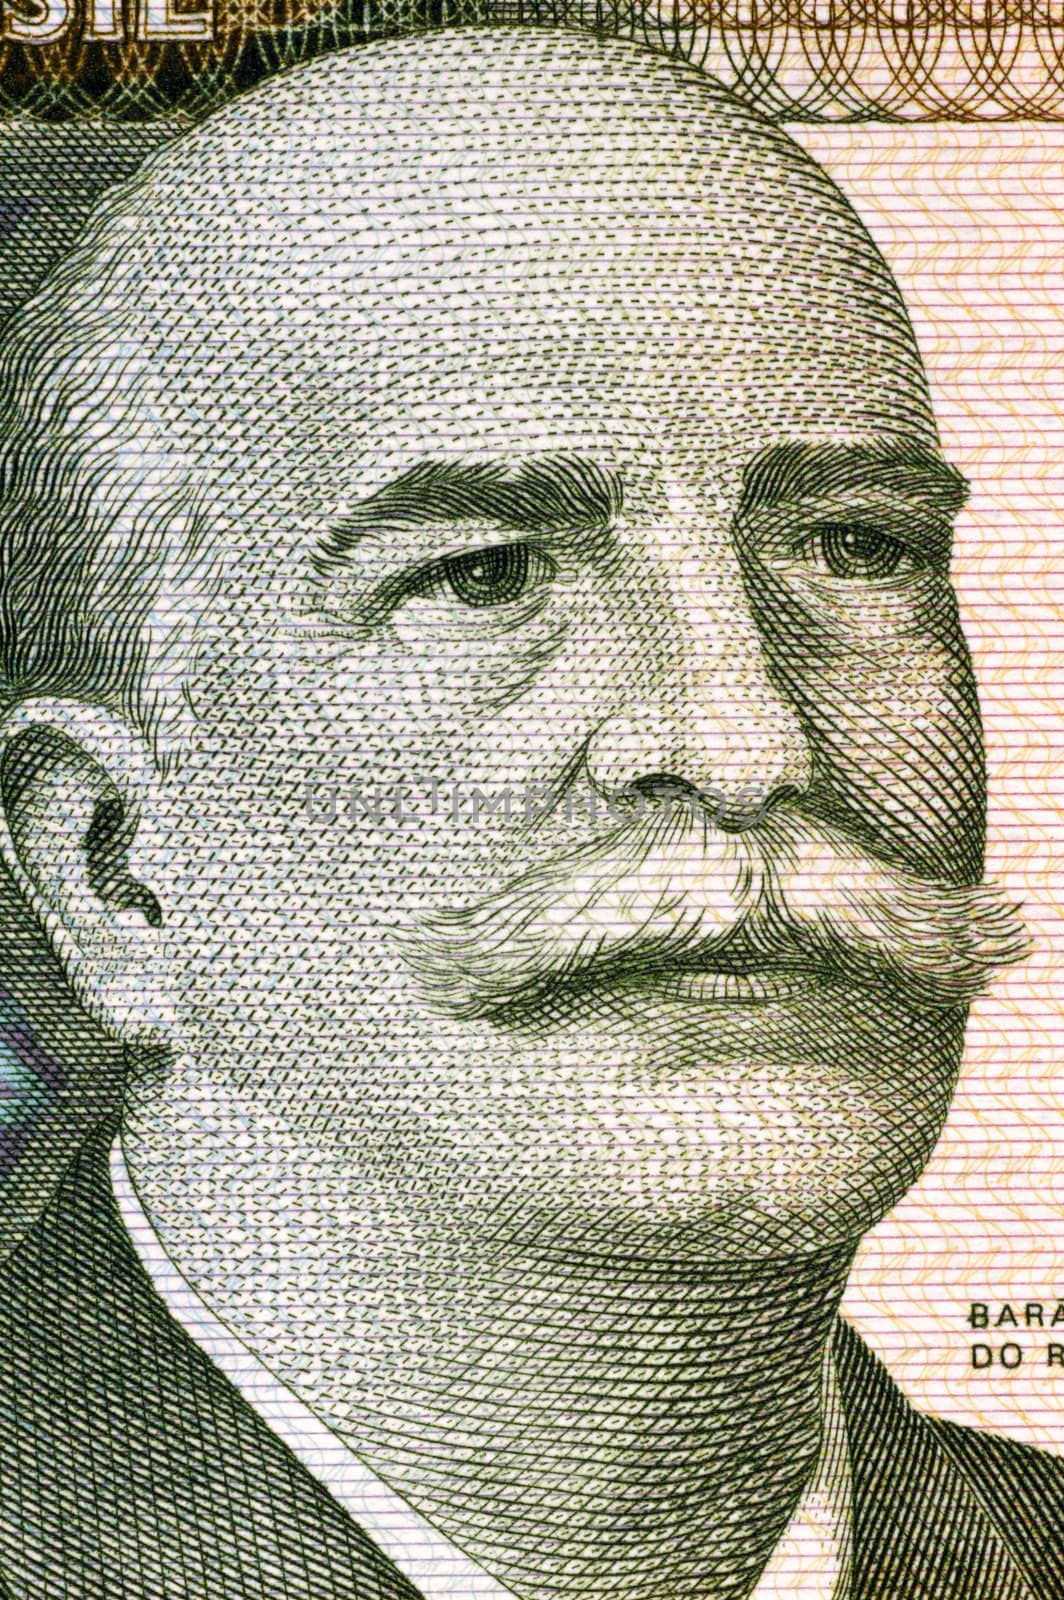 Jose Paranhos, Baron of Rio Branco (1845-1912) on 1000 Cruzeiros 1981 Banknote from Brazil. Brazilian diplomat, geographer, historian, monarchist, politician and professor. The father of Brazilian diplomacy.